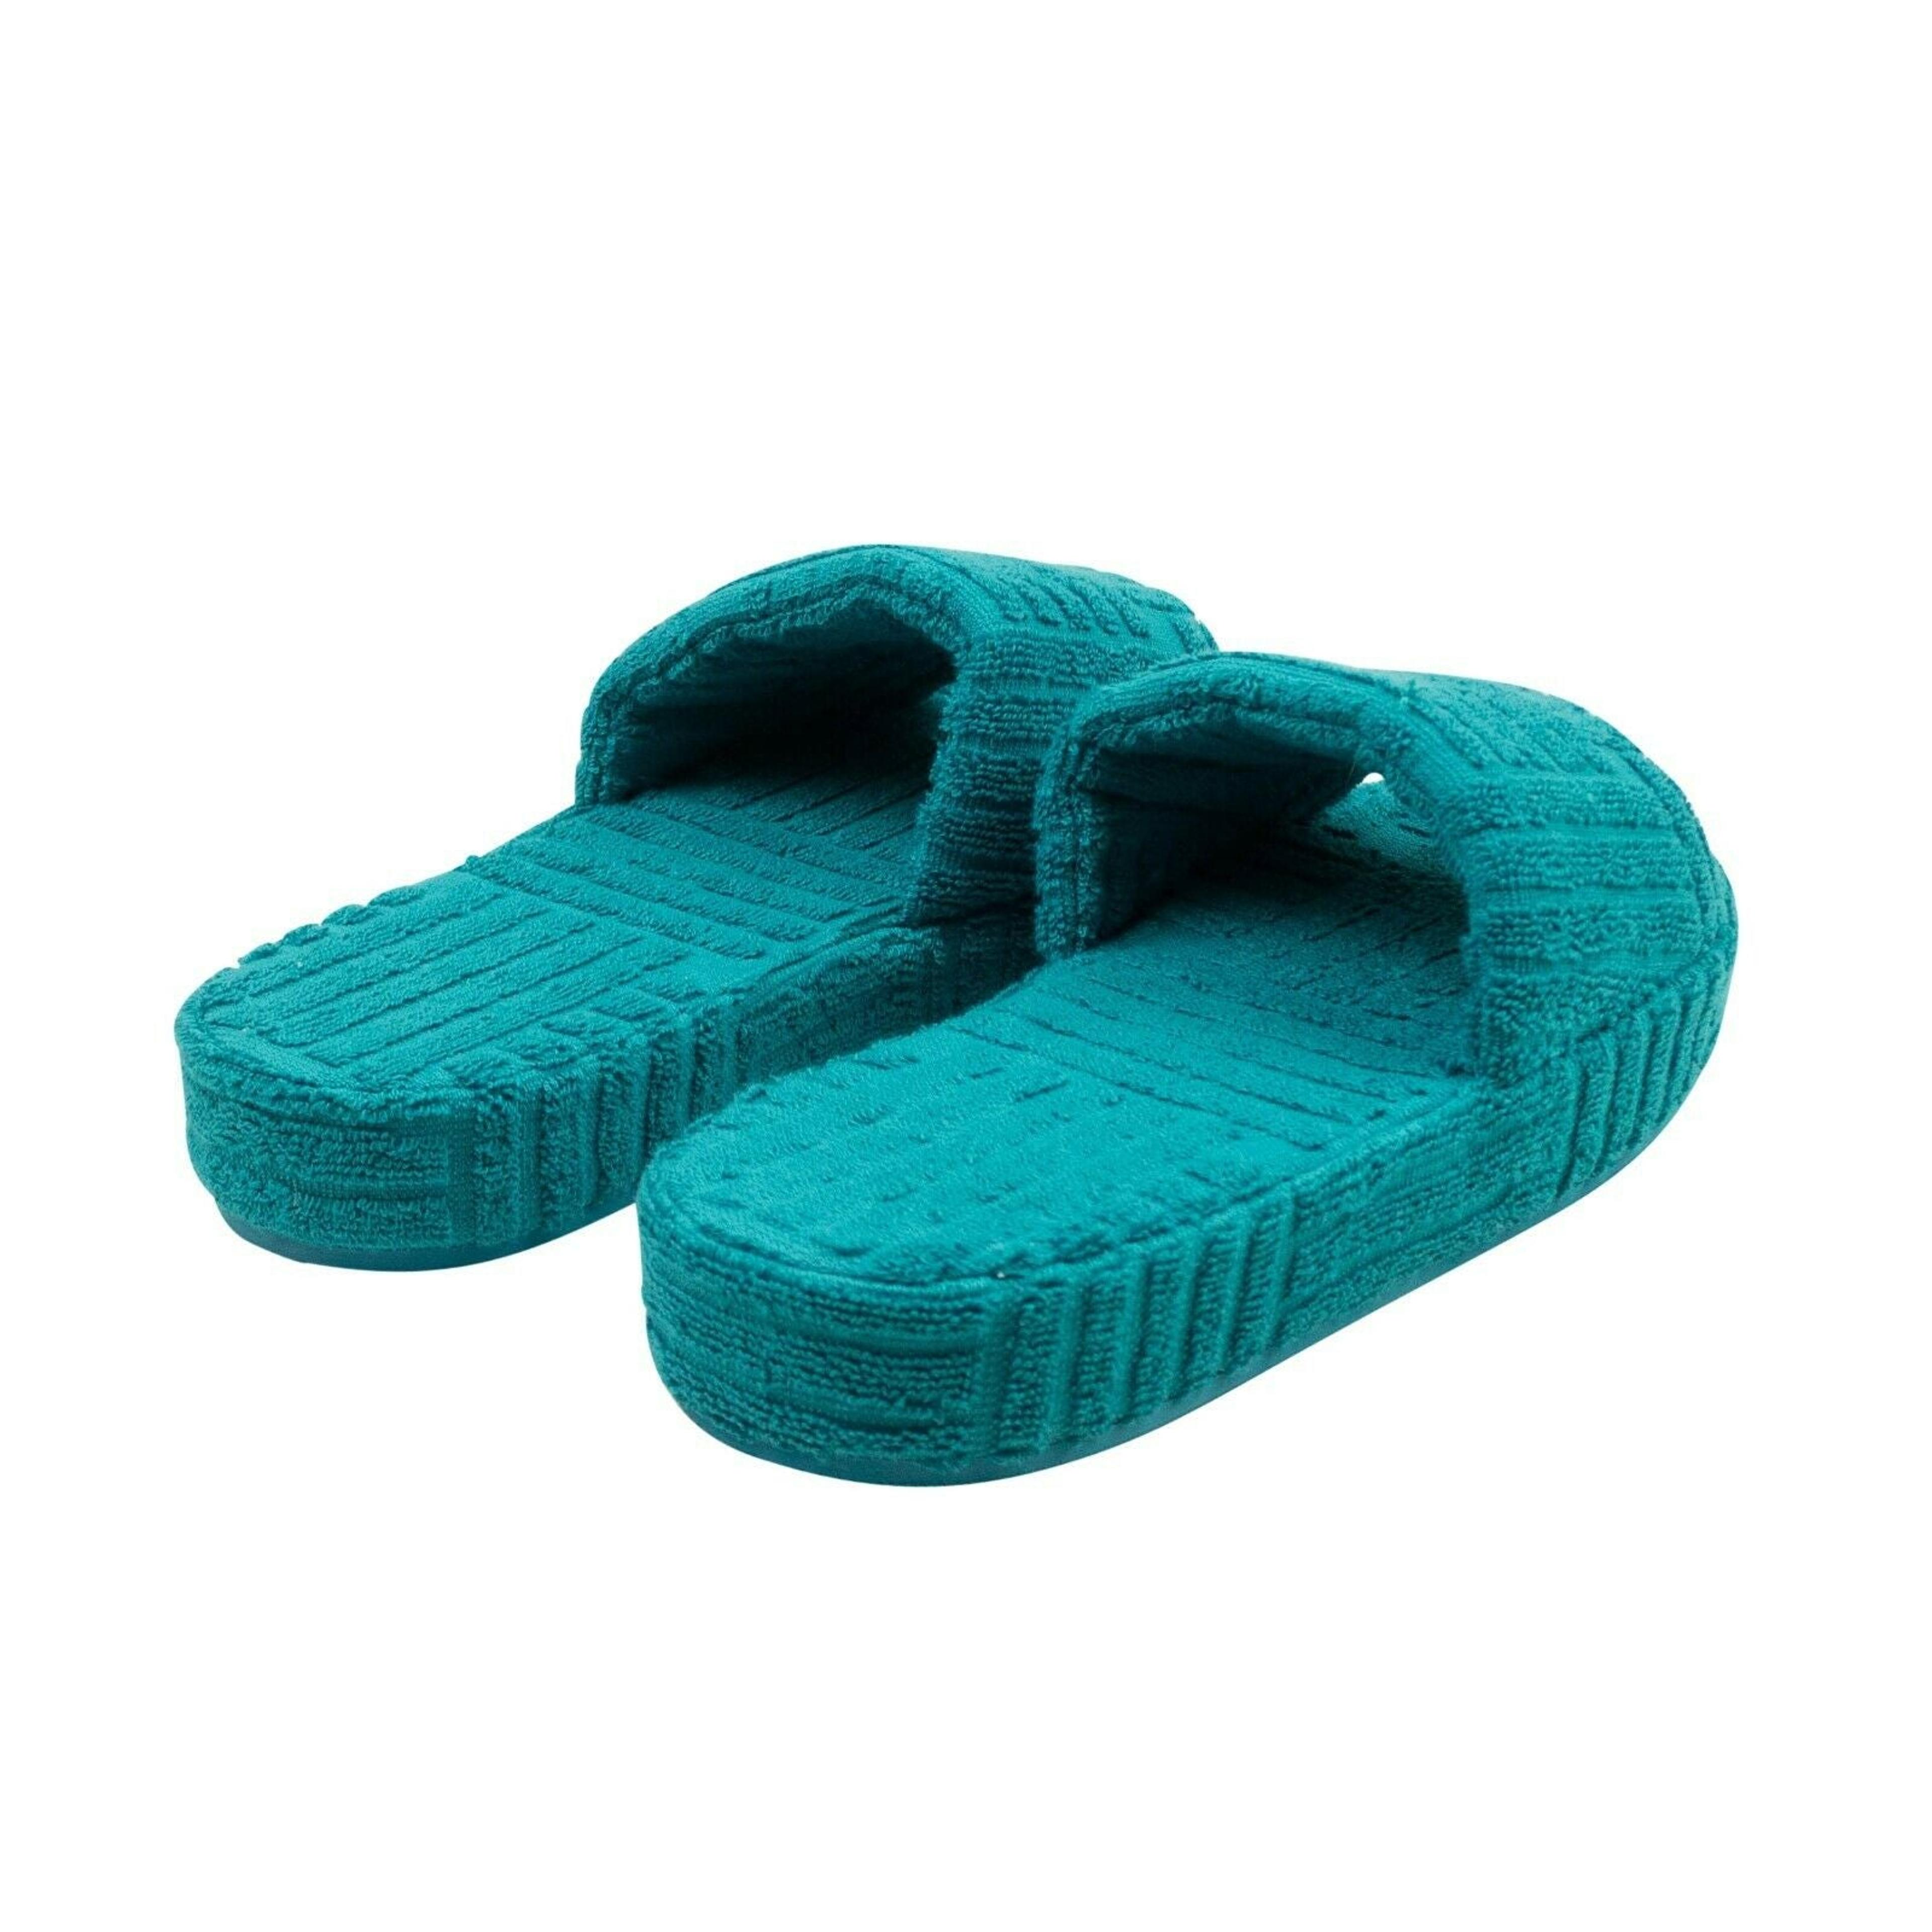 Alternate View 3 of Teal Resort Geometric Sponge Slides Slippers